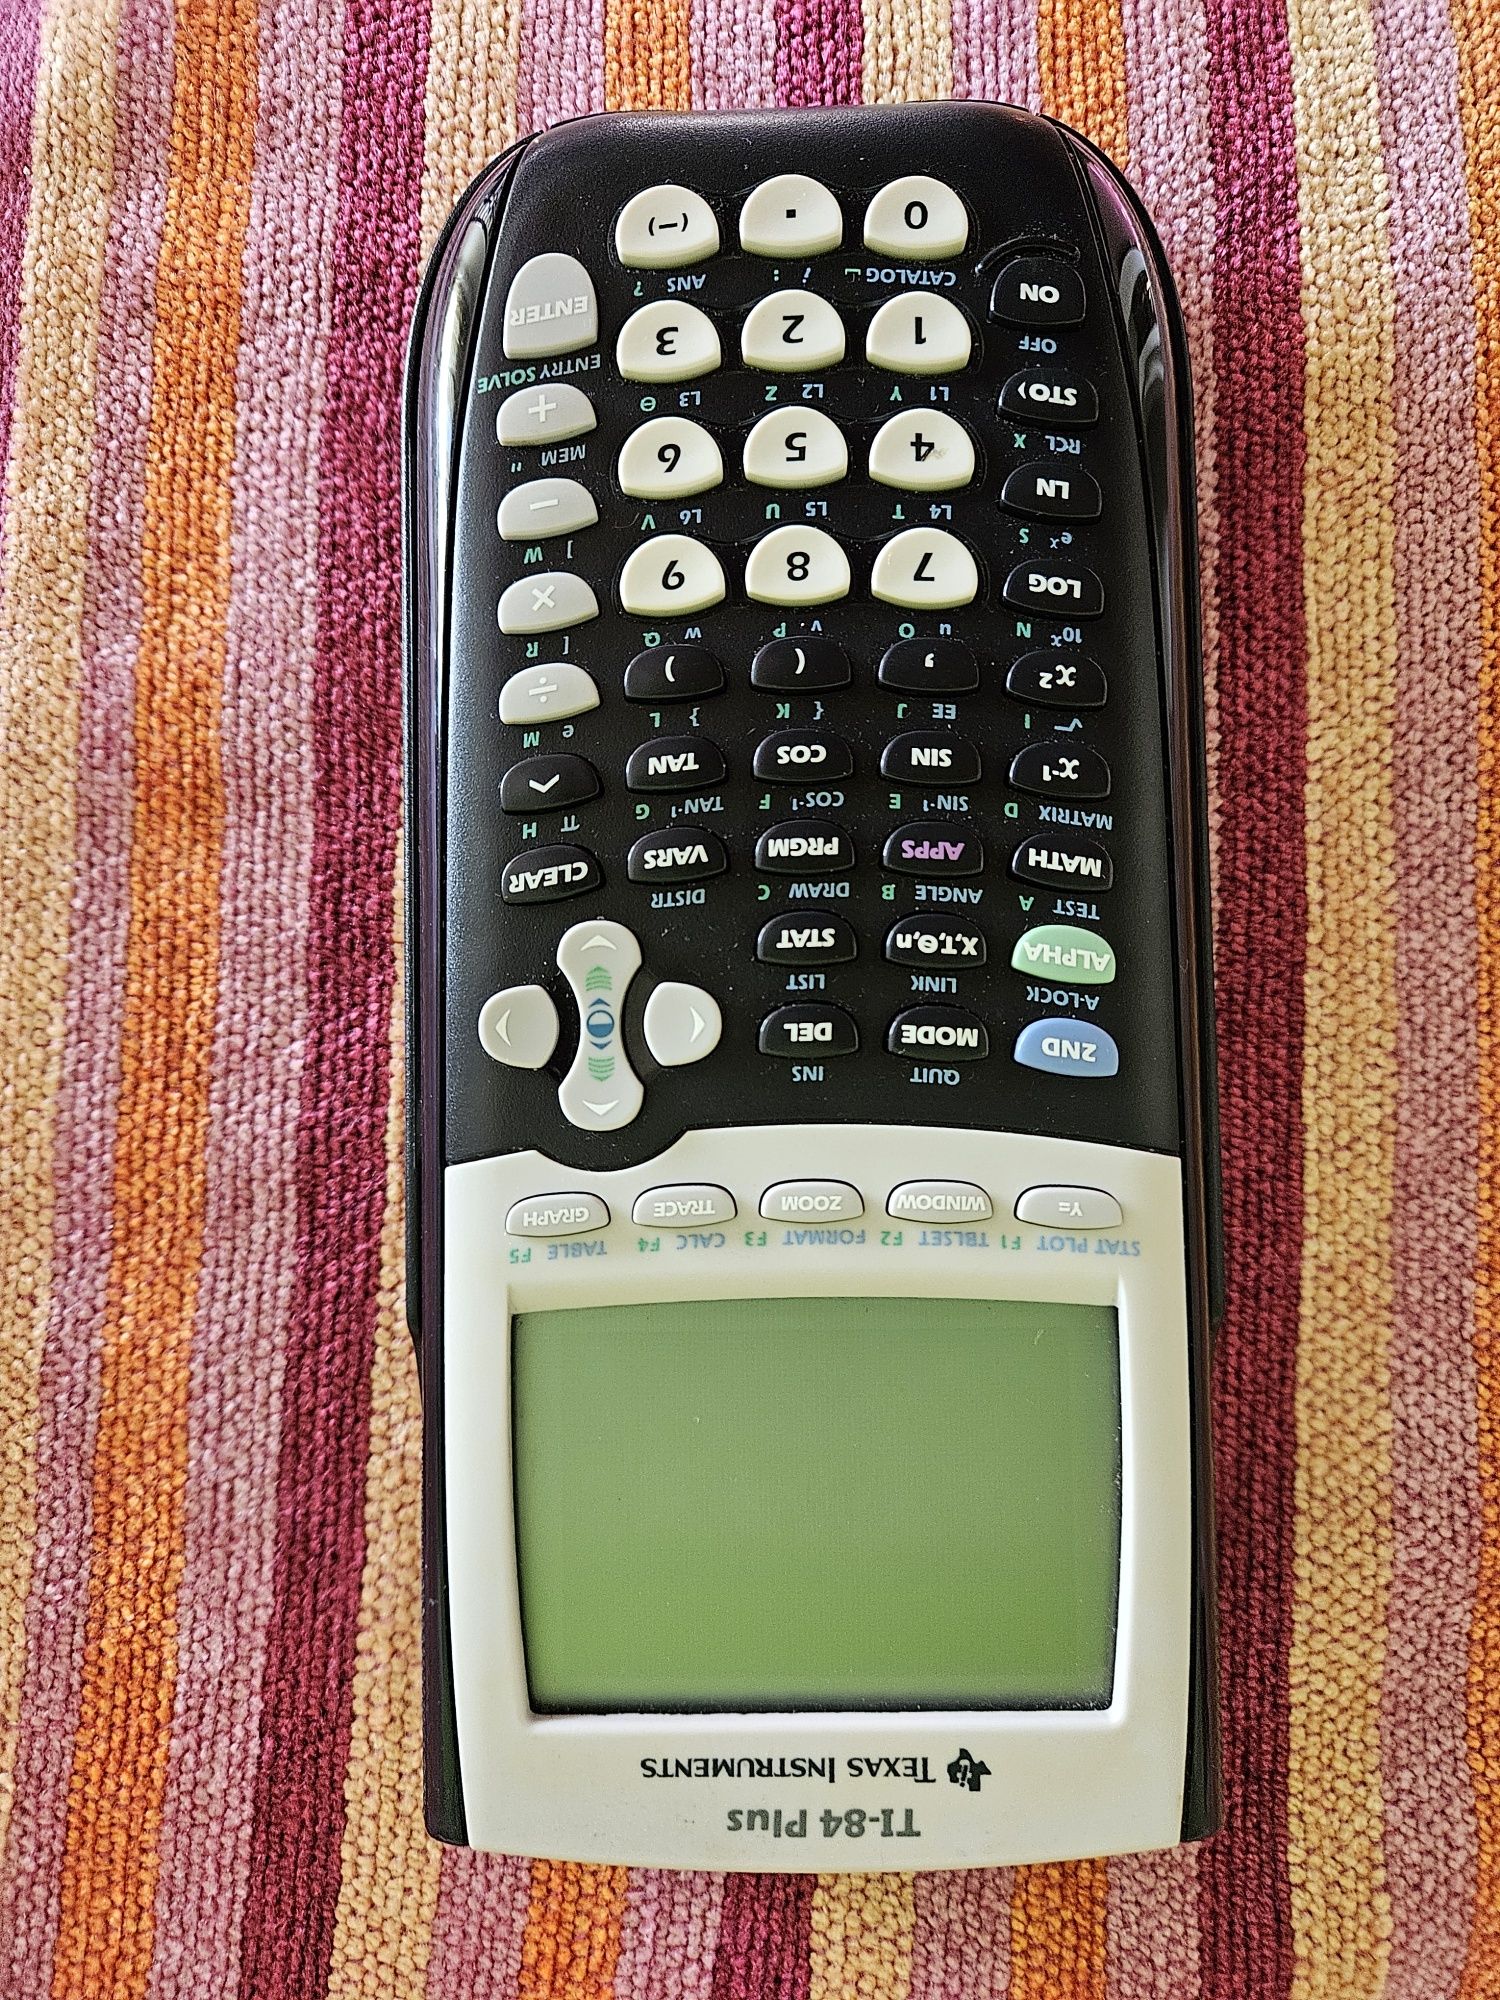 Calculadora Texas Instruments